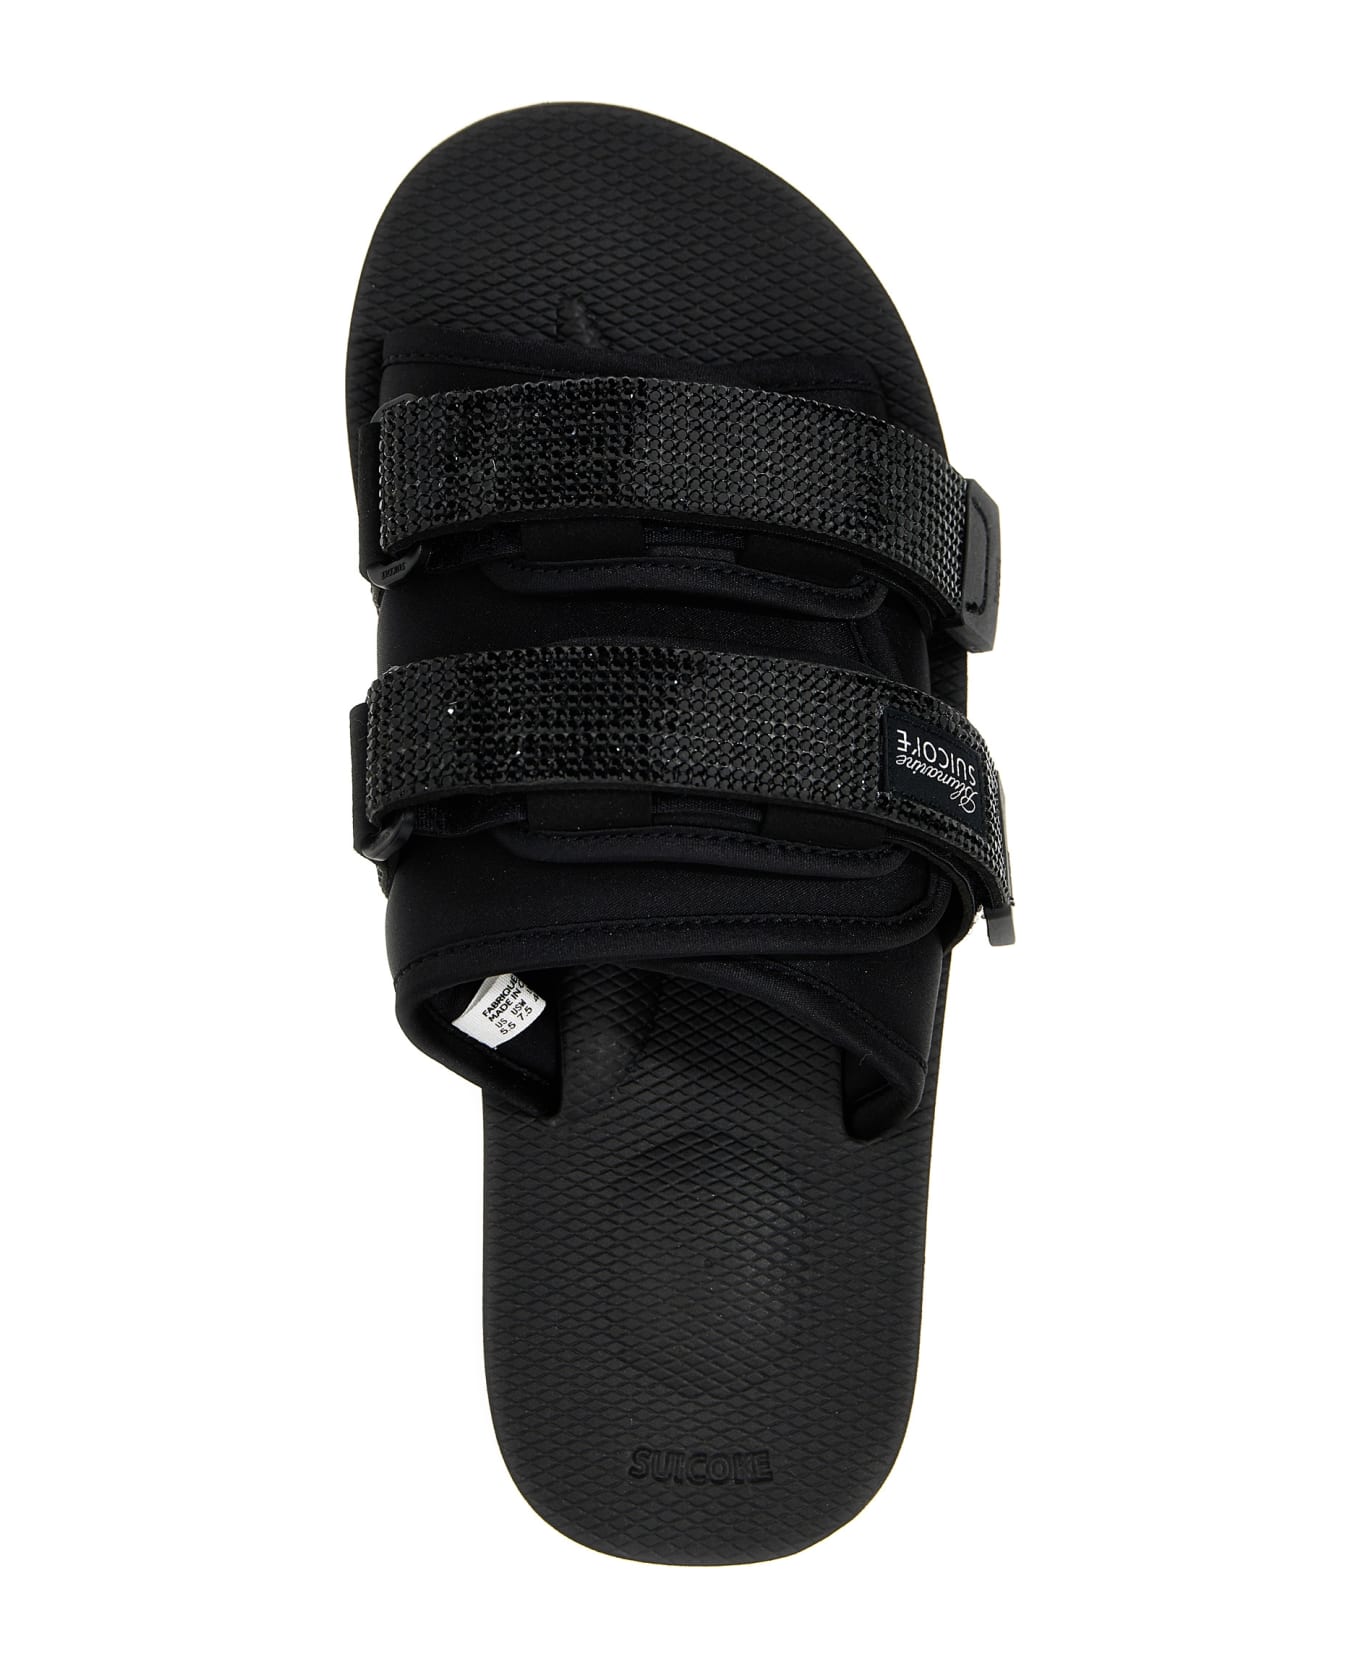 Blumarine X Suicoke 'moto' Sandals - Black  